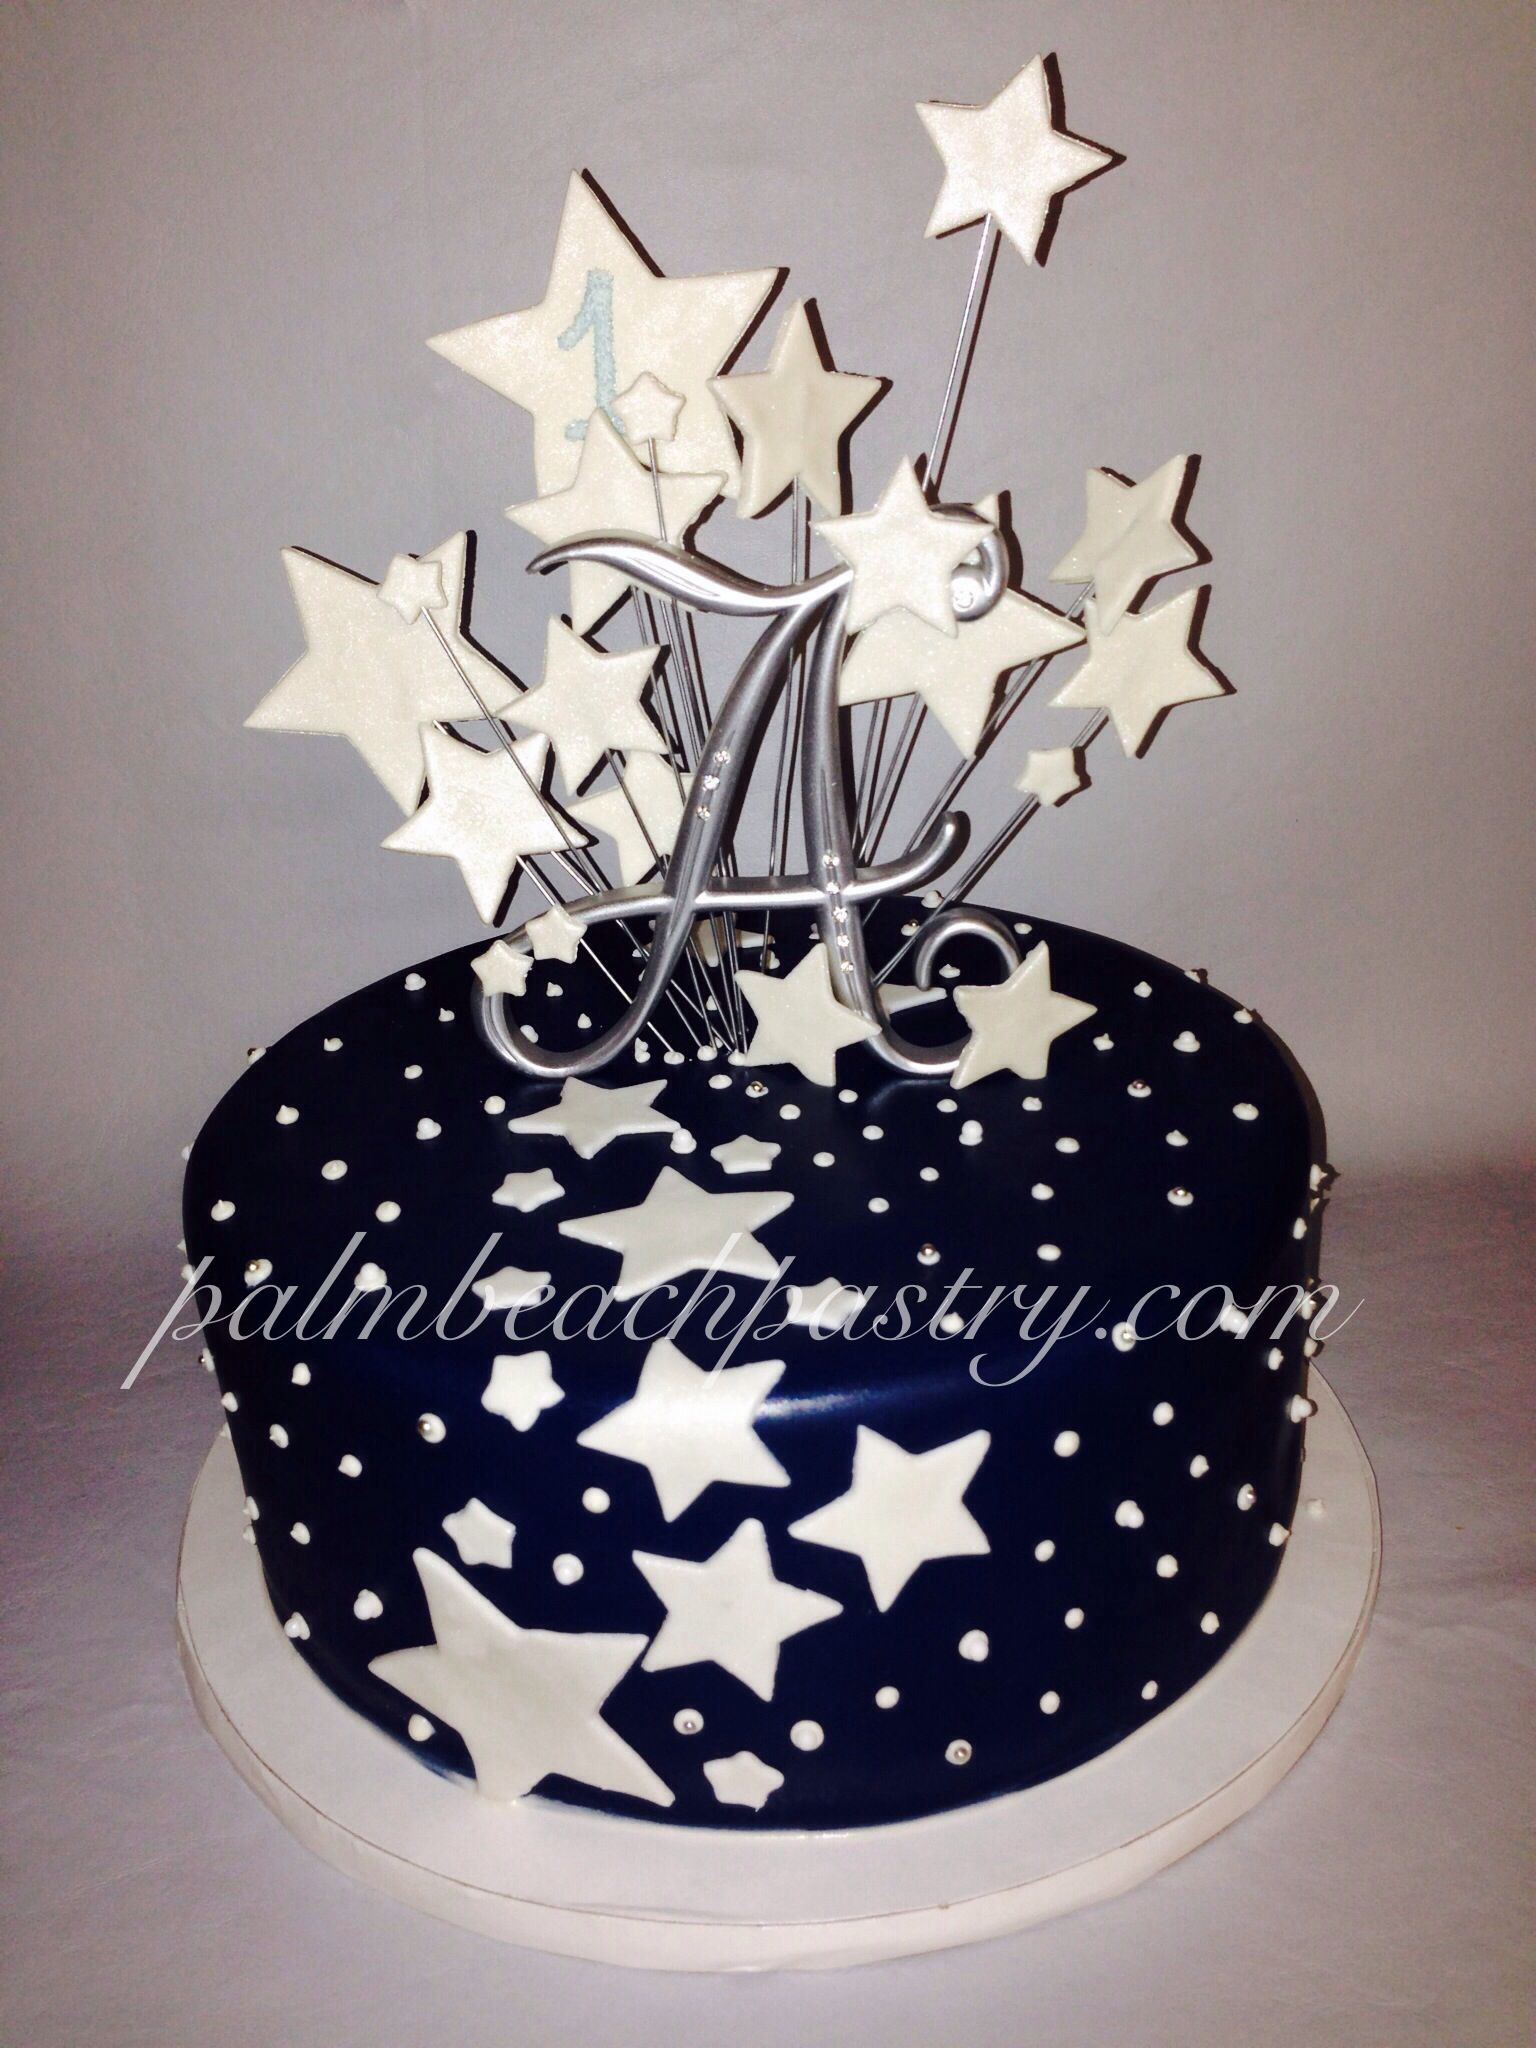 Stars Wedding Cakes
 Starburst galaxy star cake with midnight blue fondant